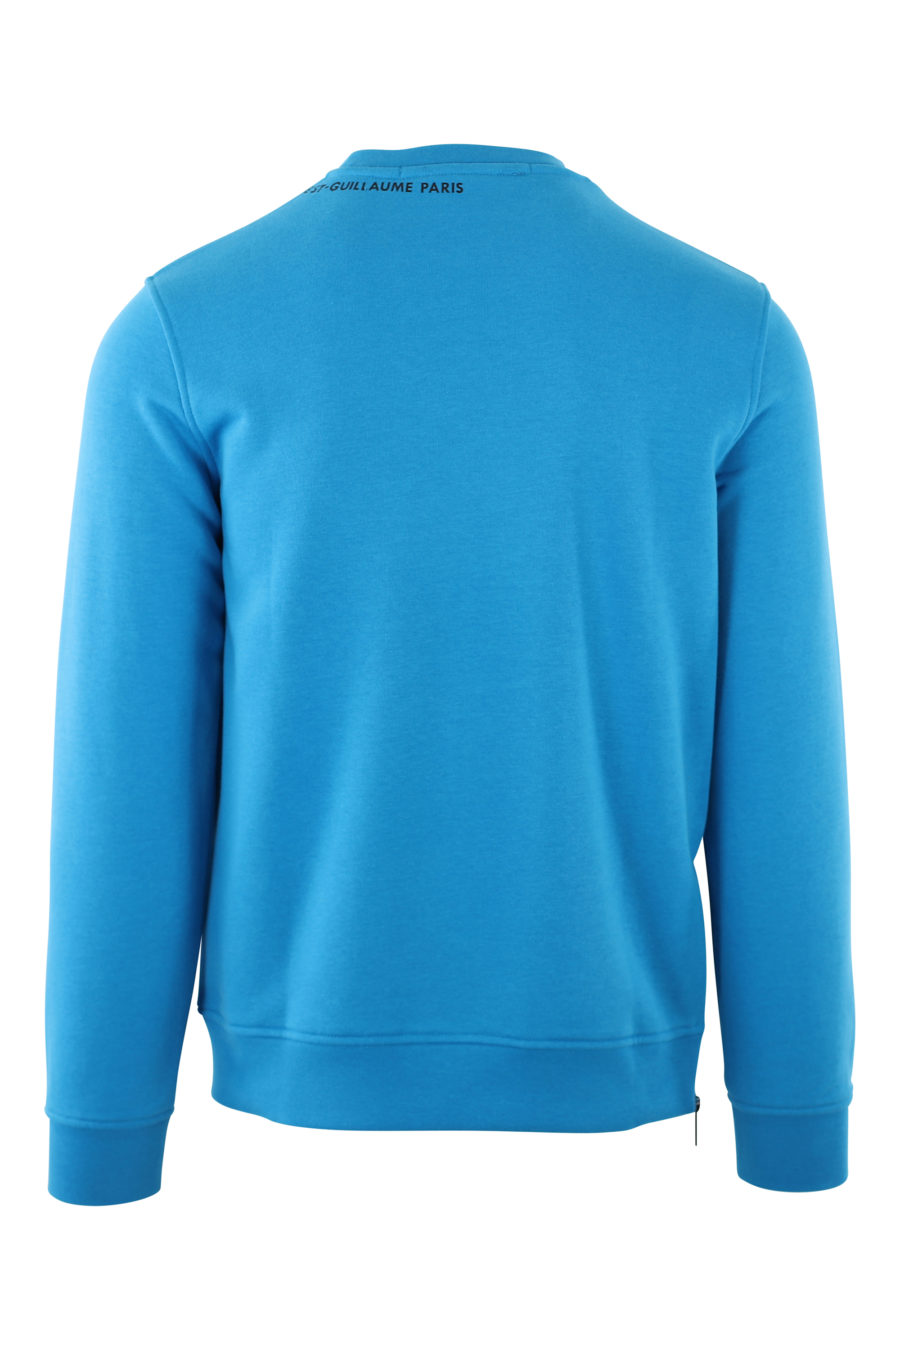 Blaues Sweatshirt mit Gummilogo - IMG 2105